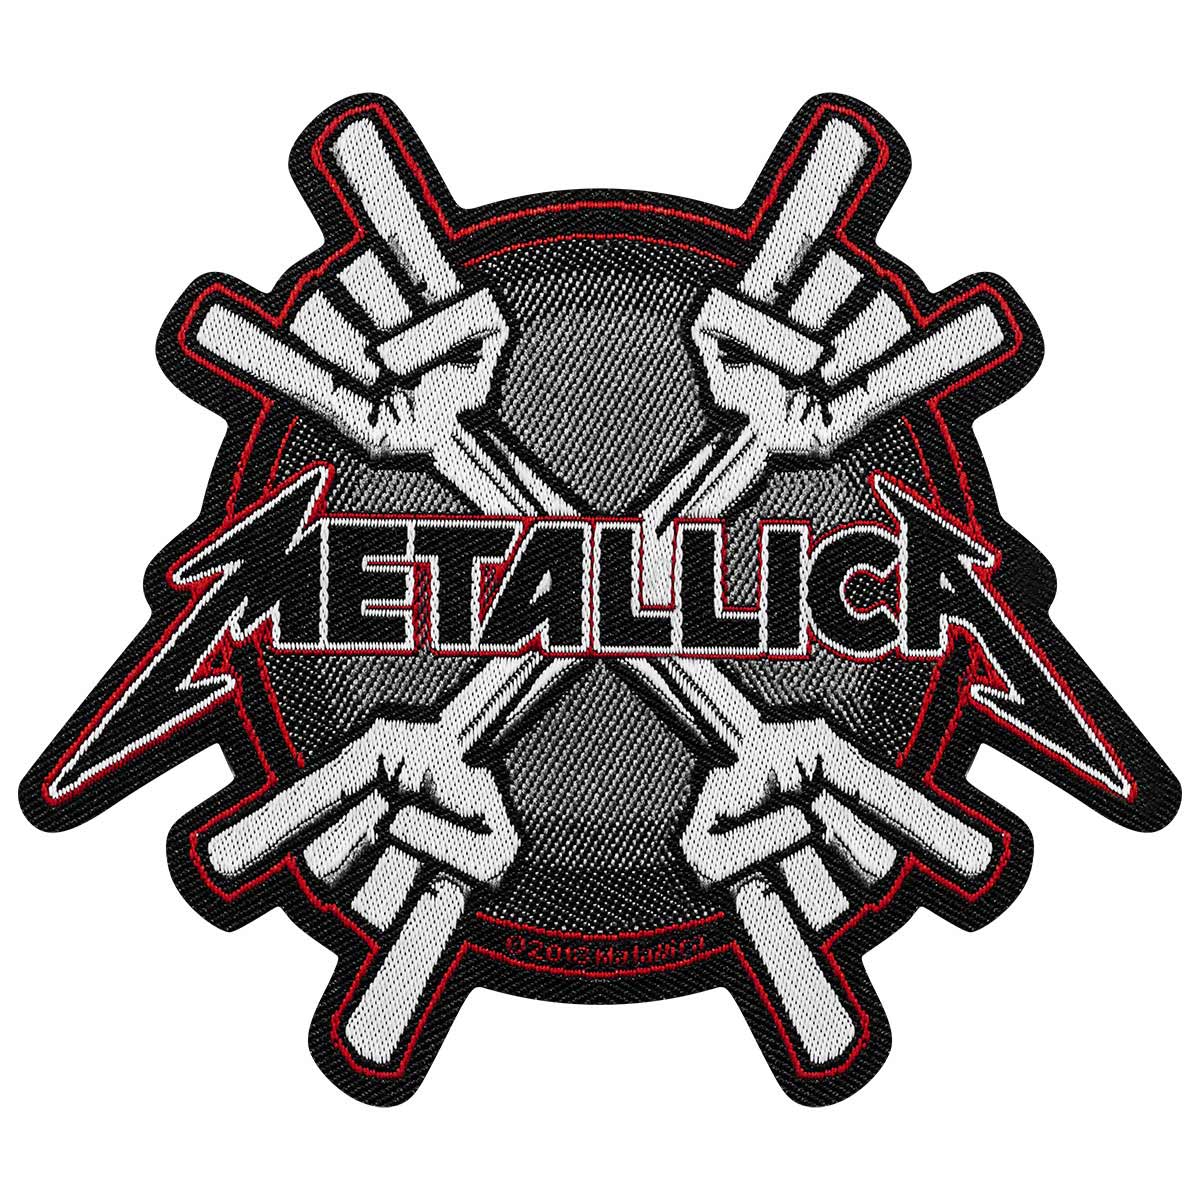 Patch Metallica - Metal Militia